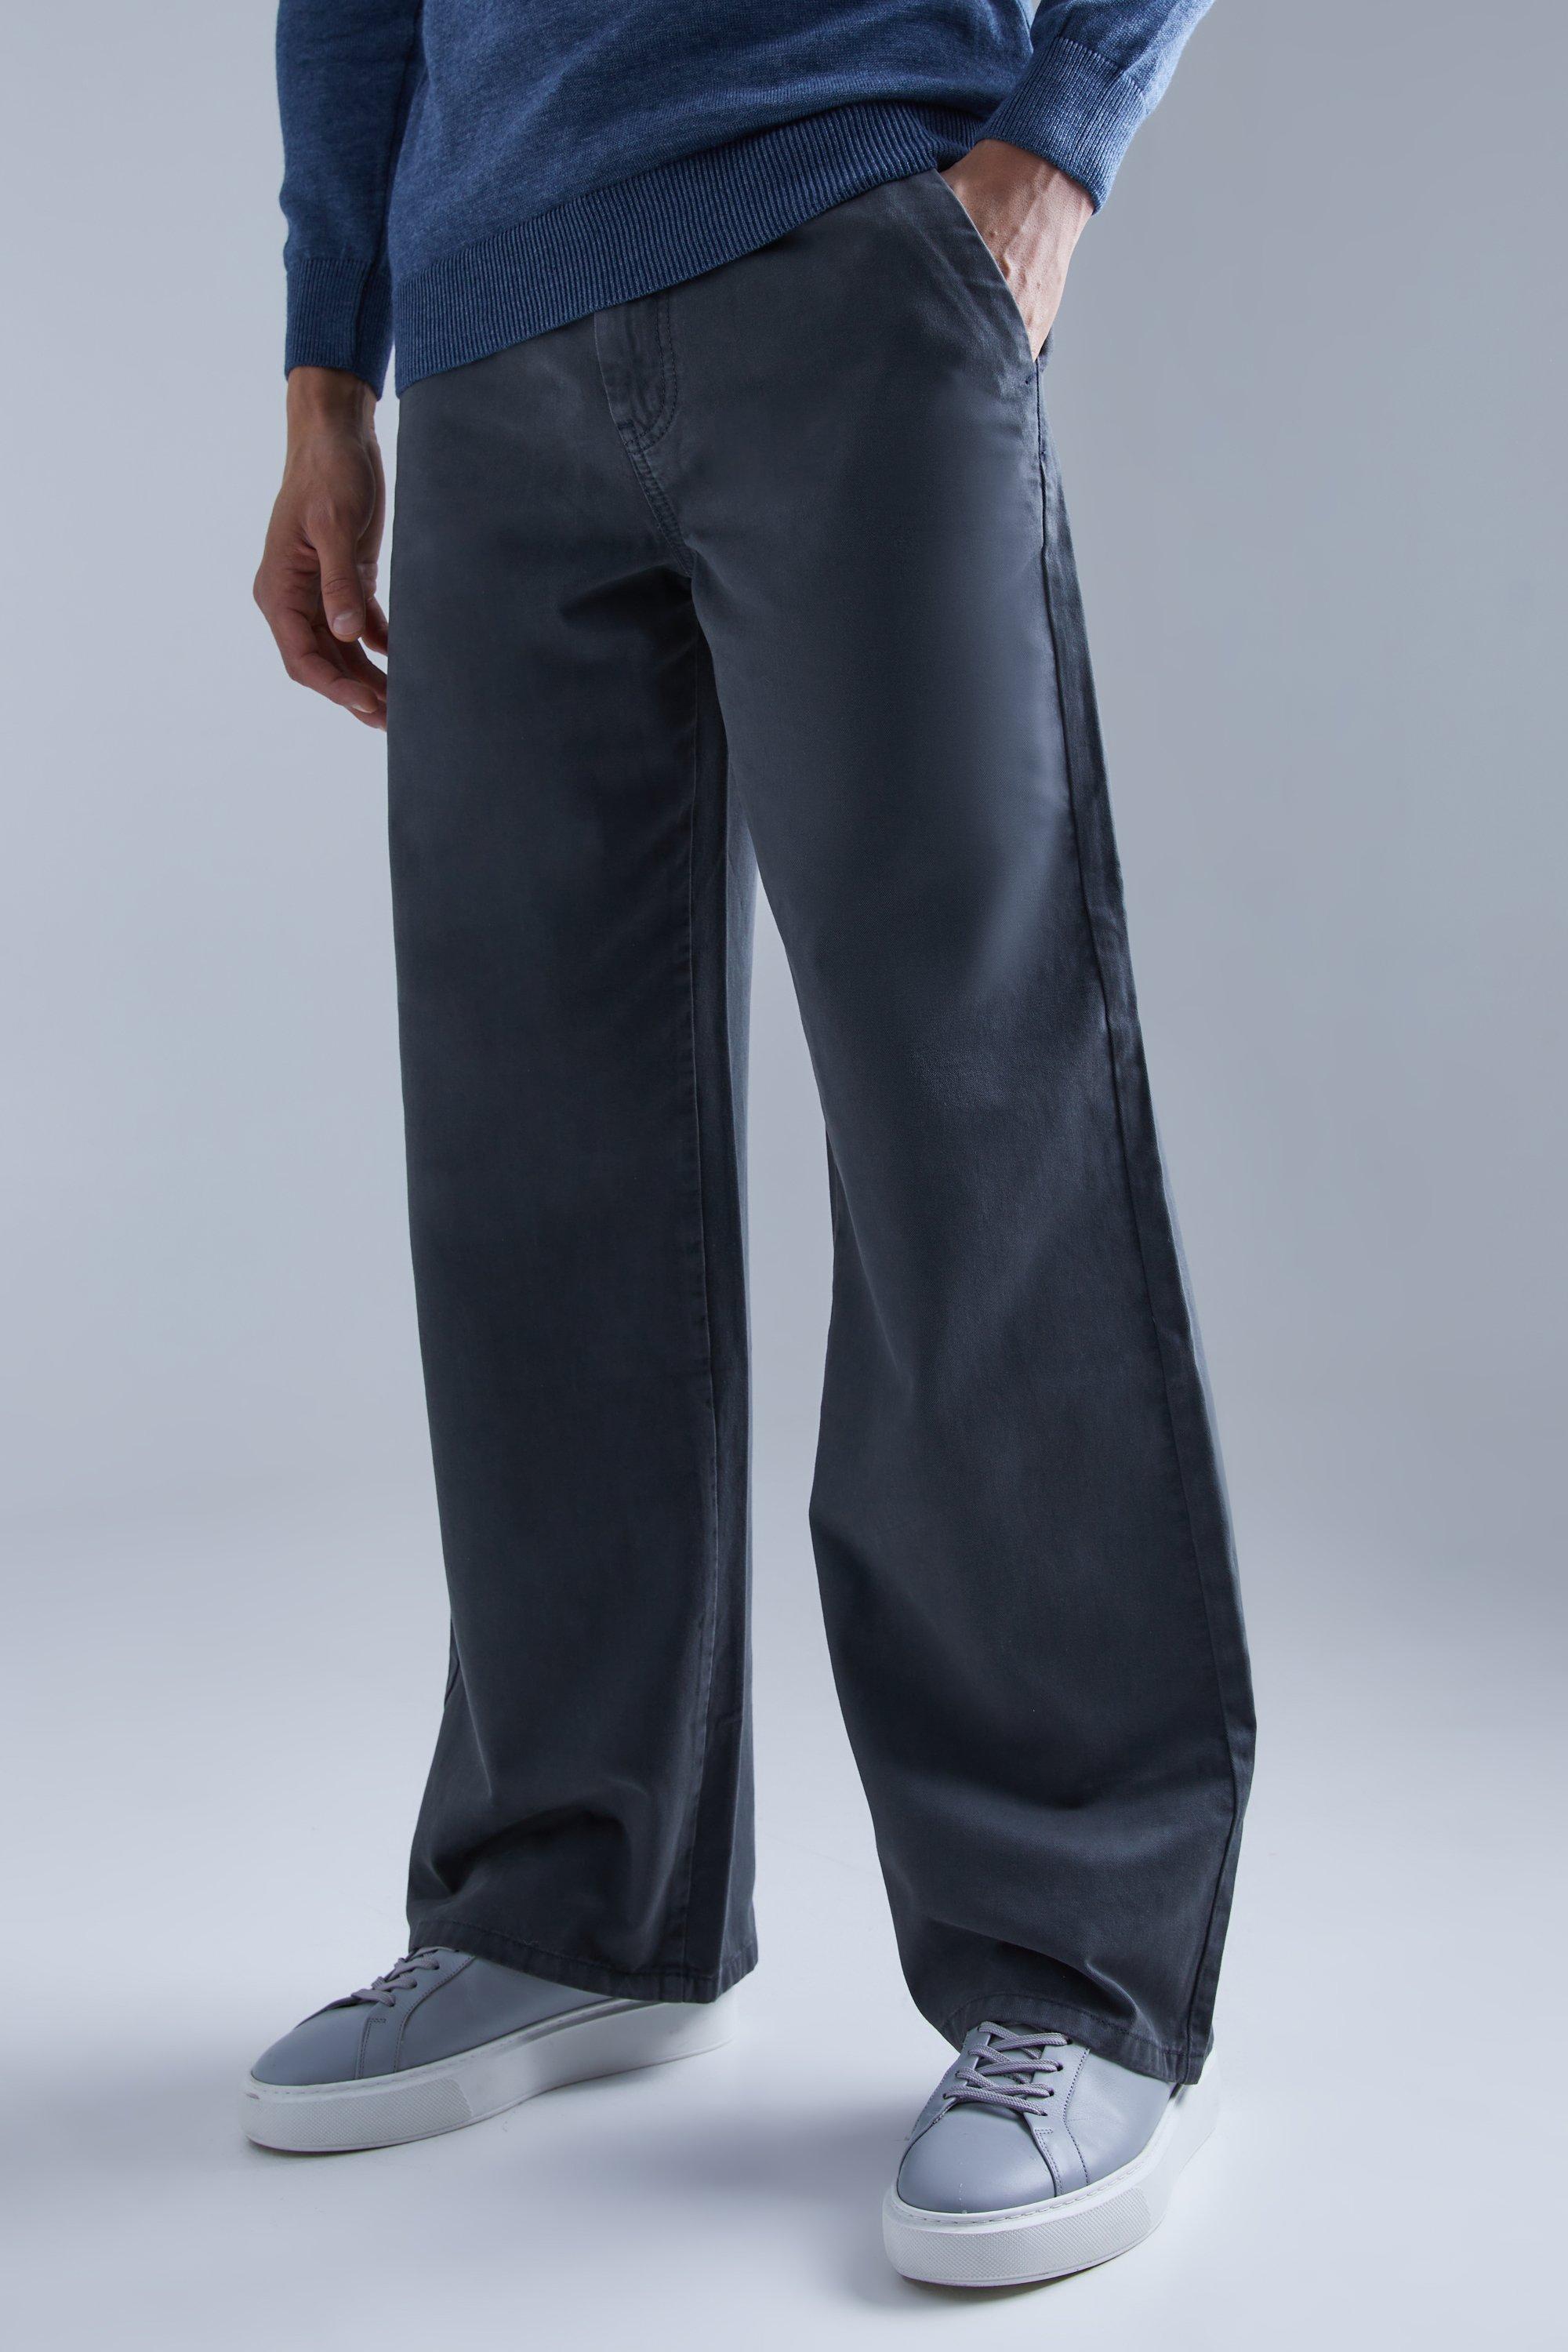 pantalon chino large homme - gris - 36, gris